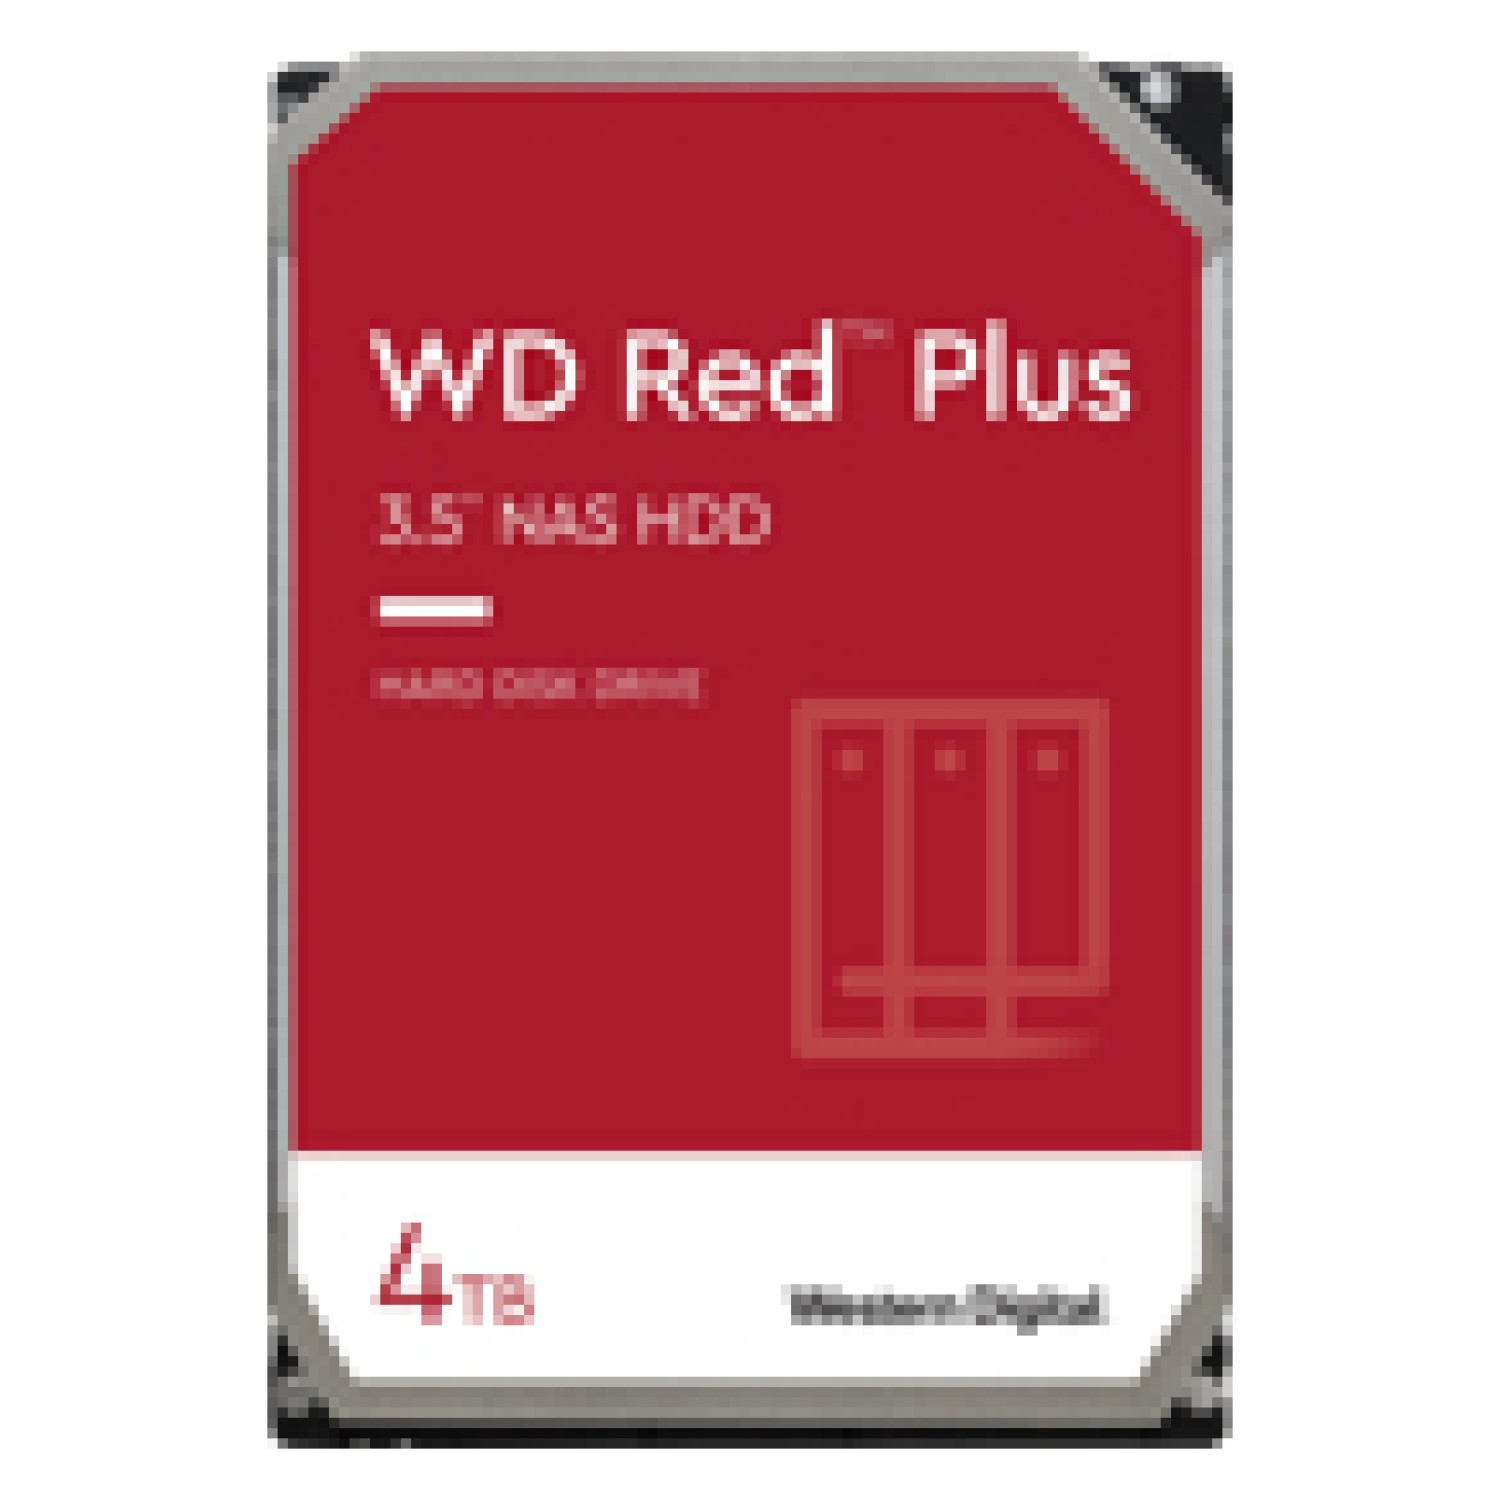 WD Red Plus 4TB SATA 6Gb/s 3.5inch HDD